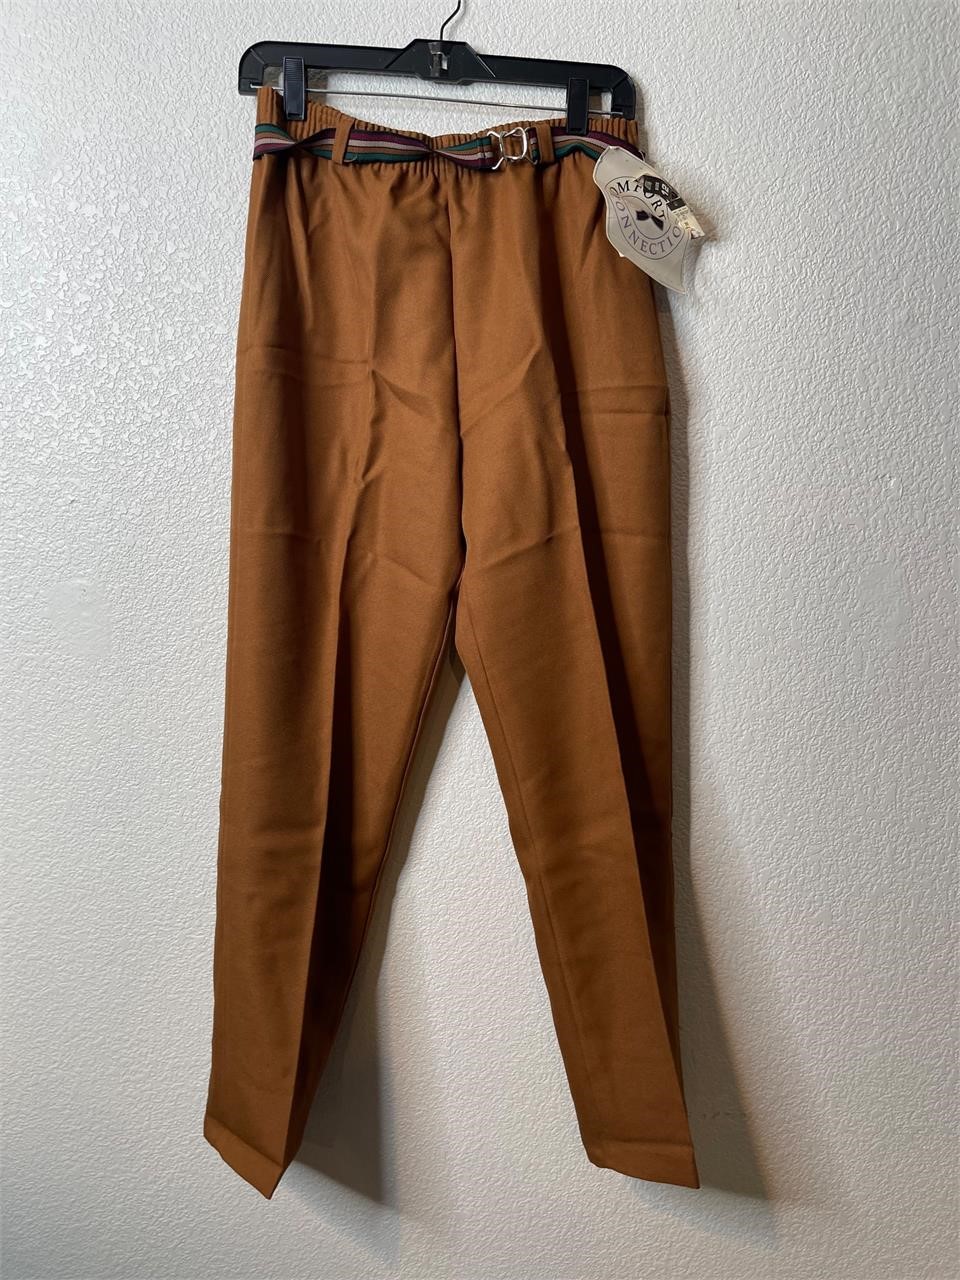 Vintage Femme Comfort Connection Pants NWT